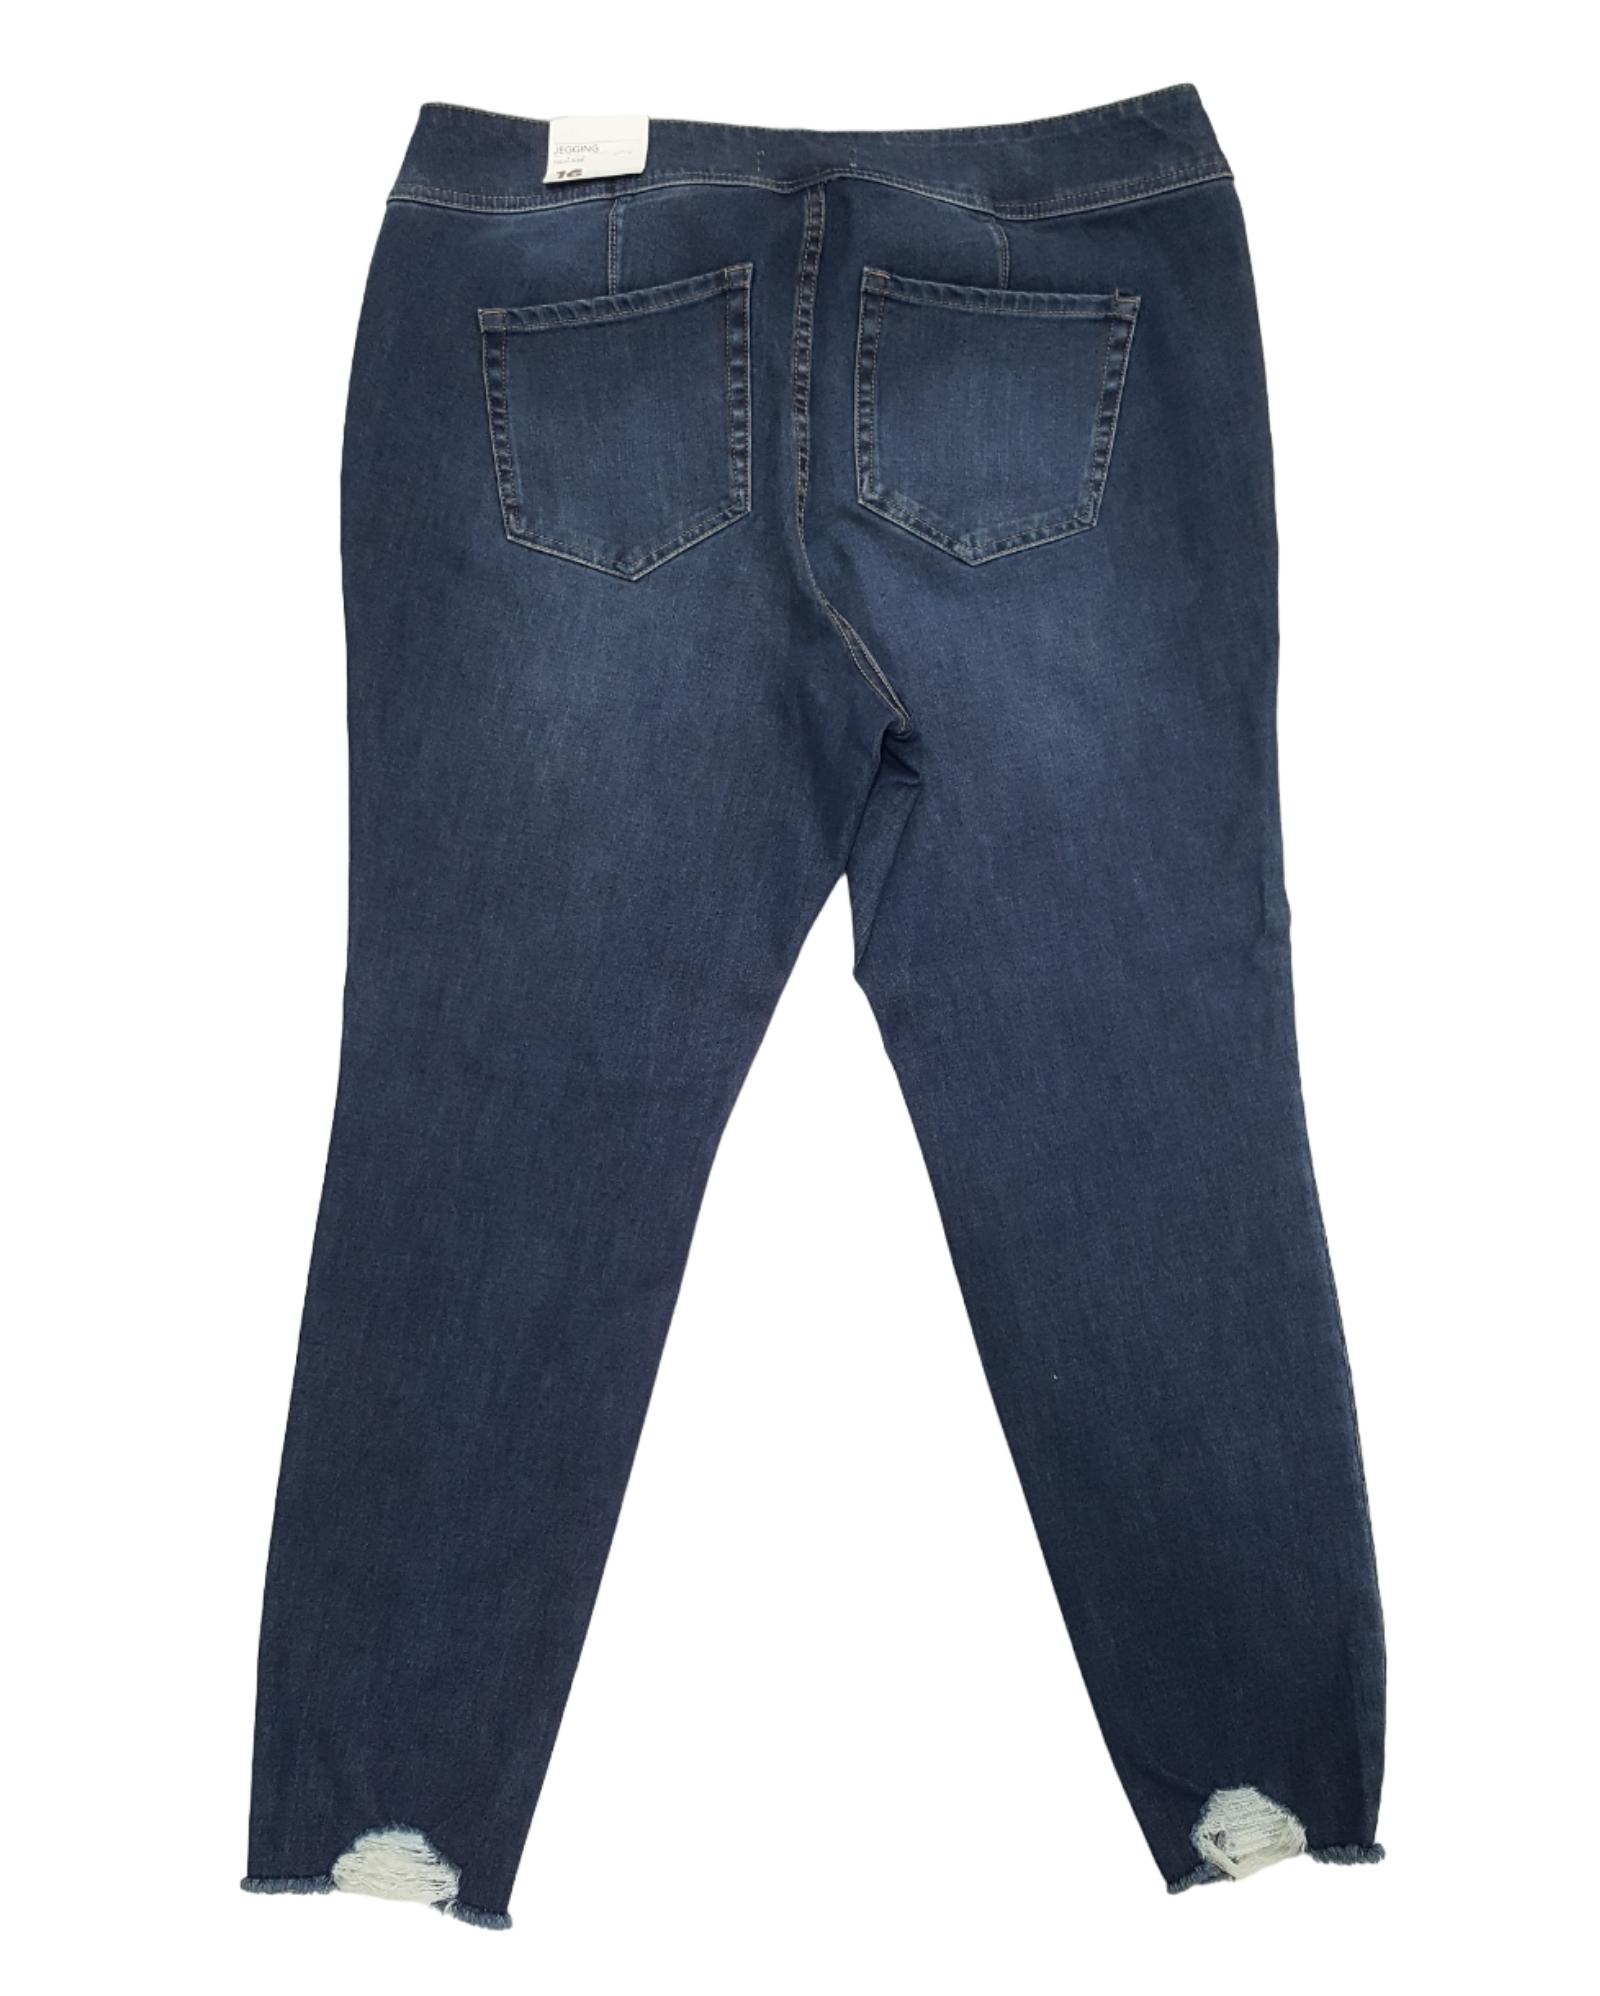 Jeans Rectos Lane Bryant 2